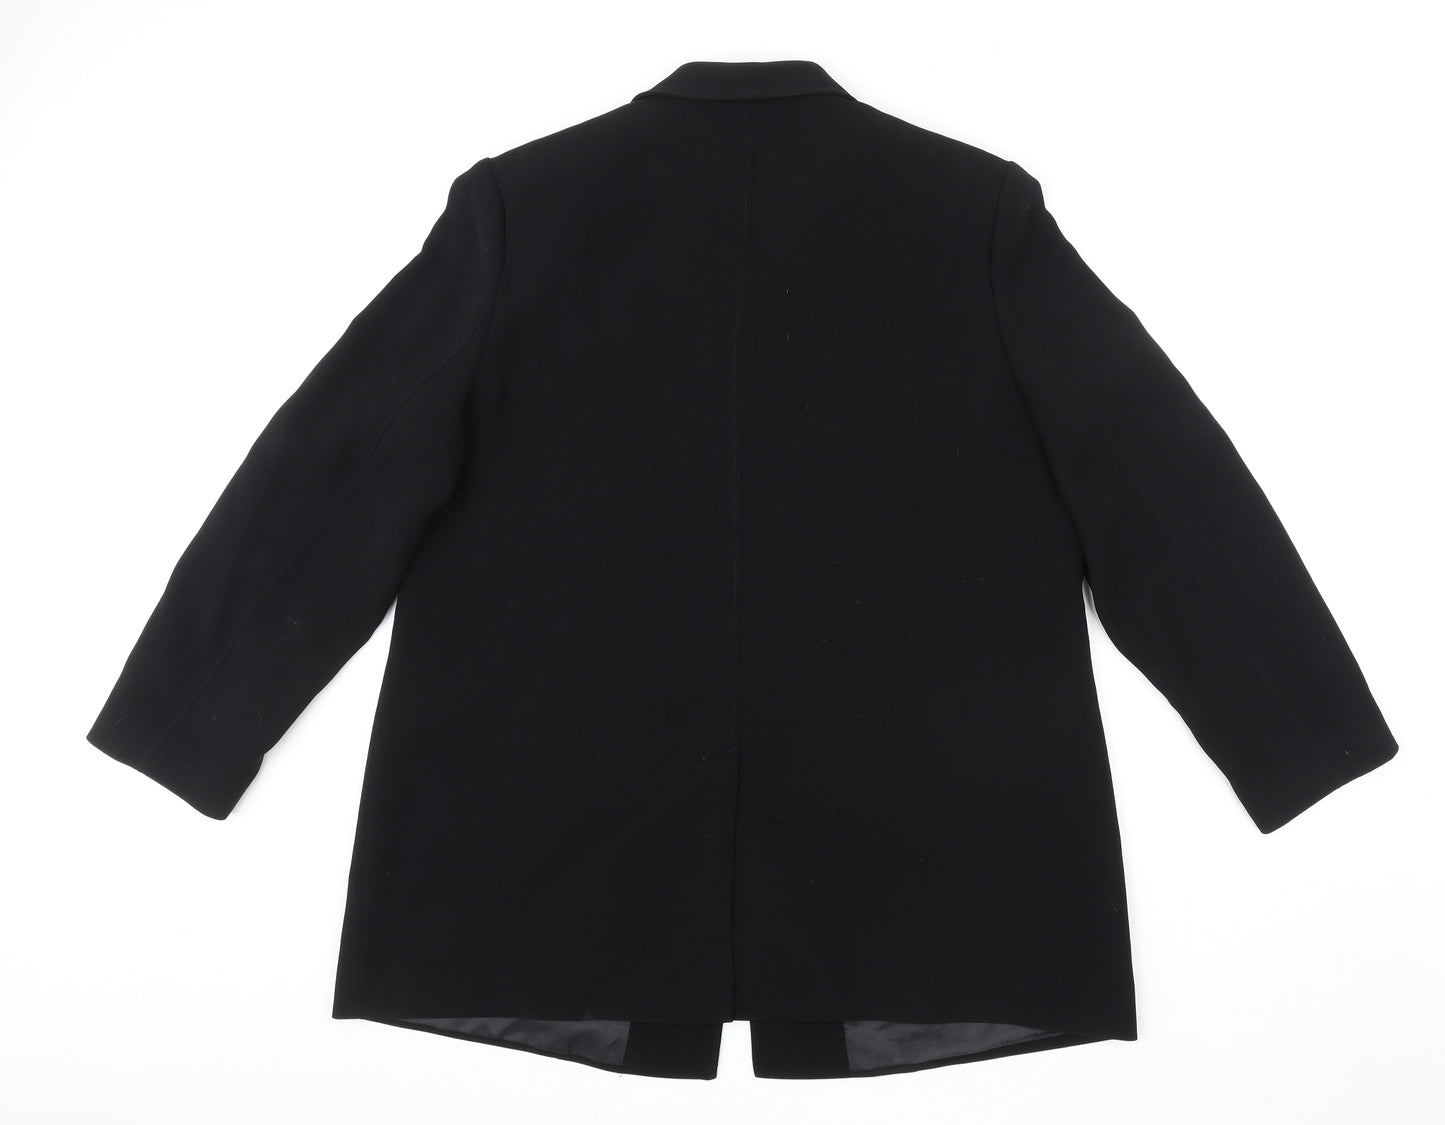 ELVI Womens Black Jacket Blazer Size 20 Button